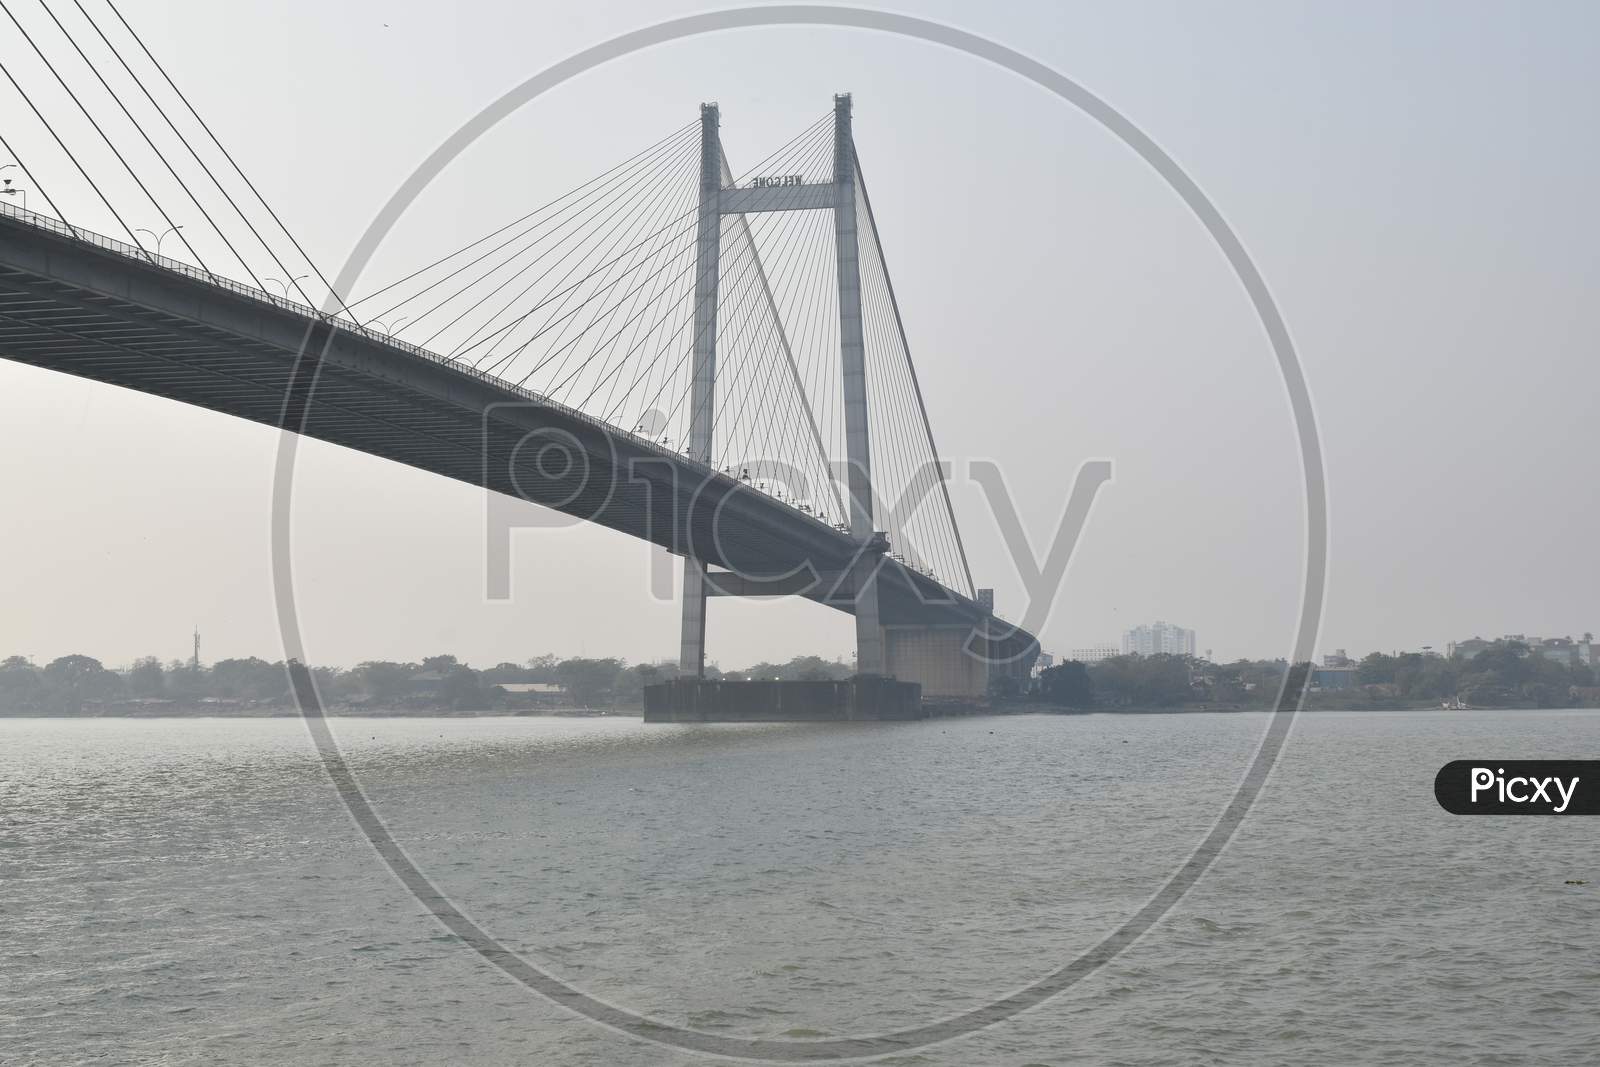 Second Hooghly Bridge, Kolkata